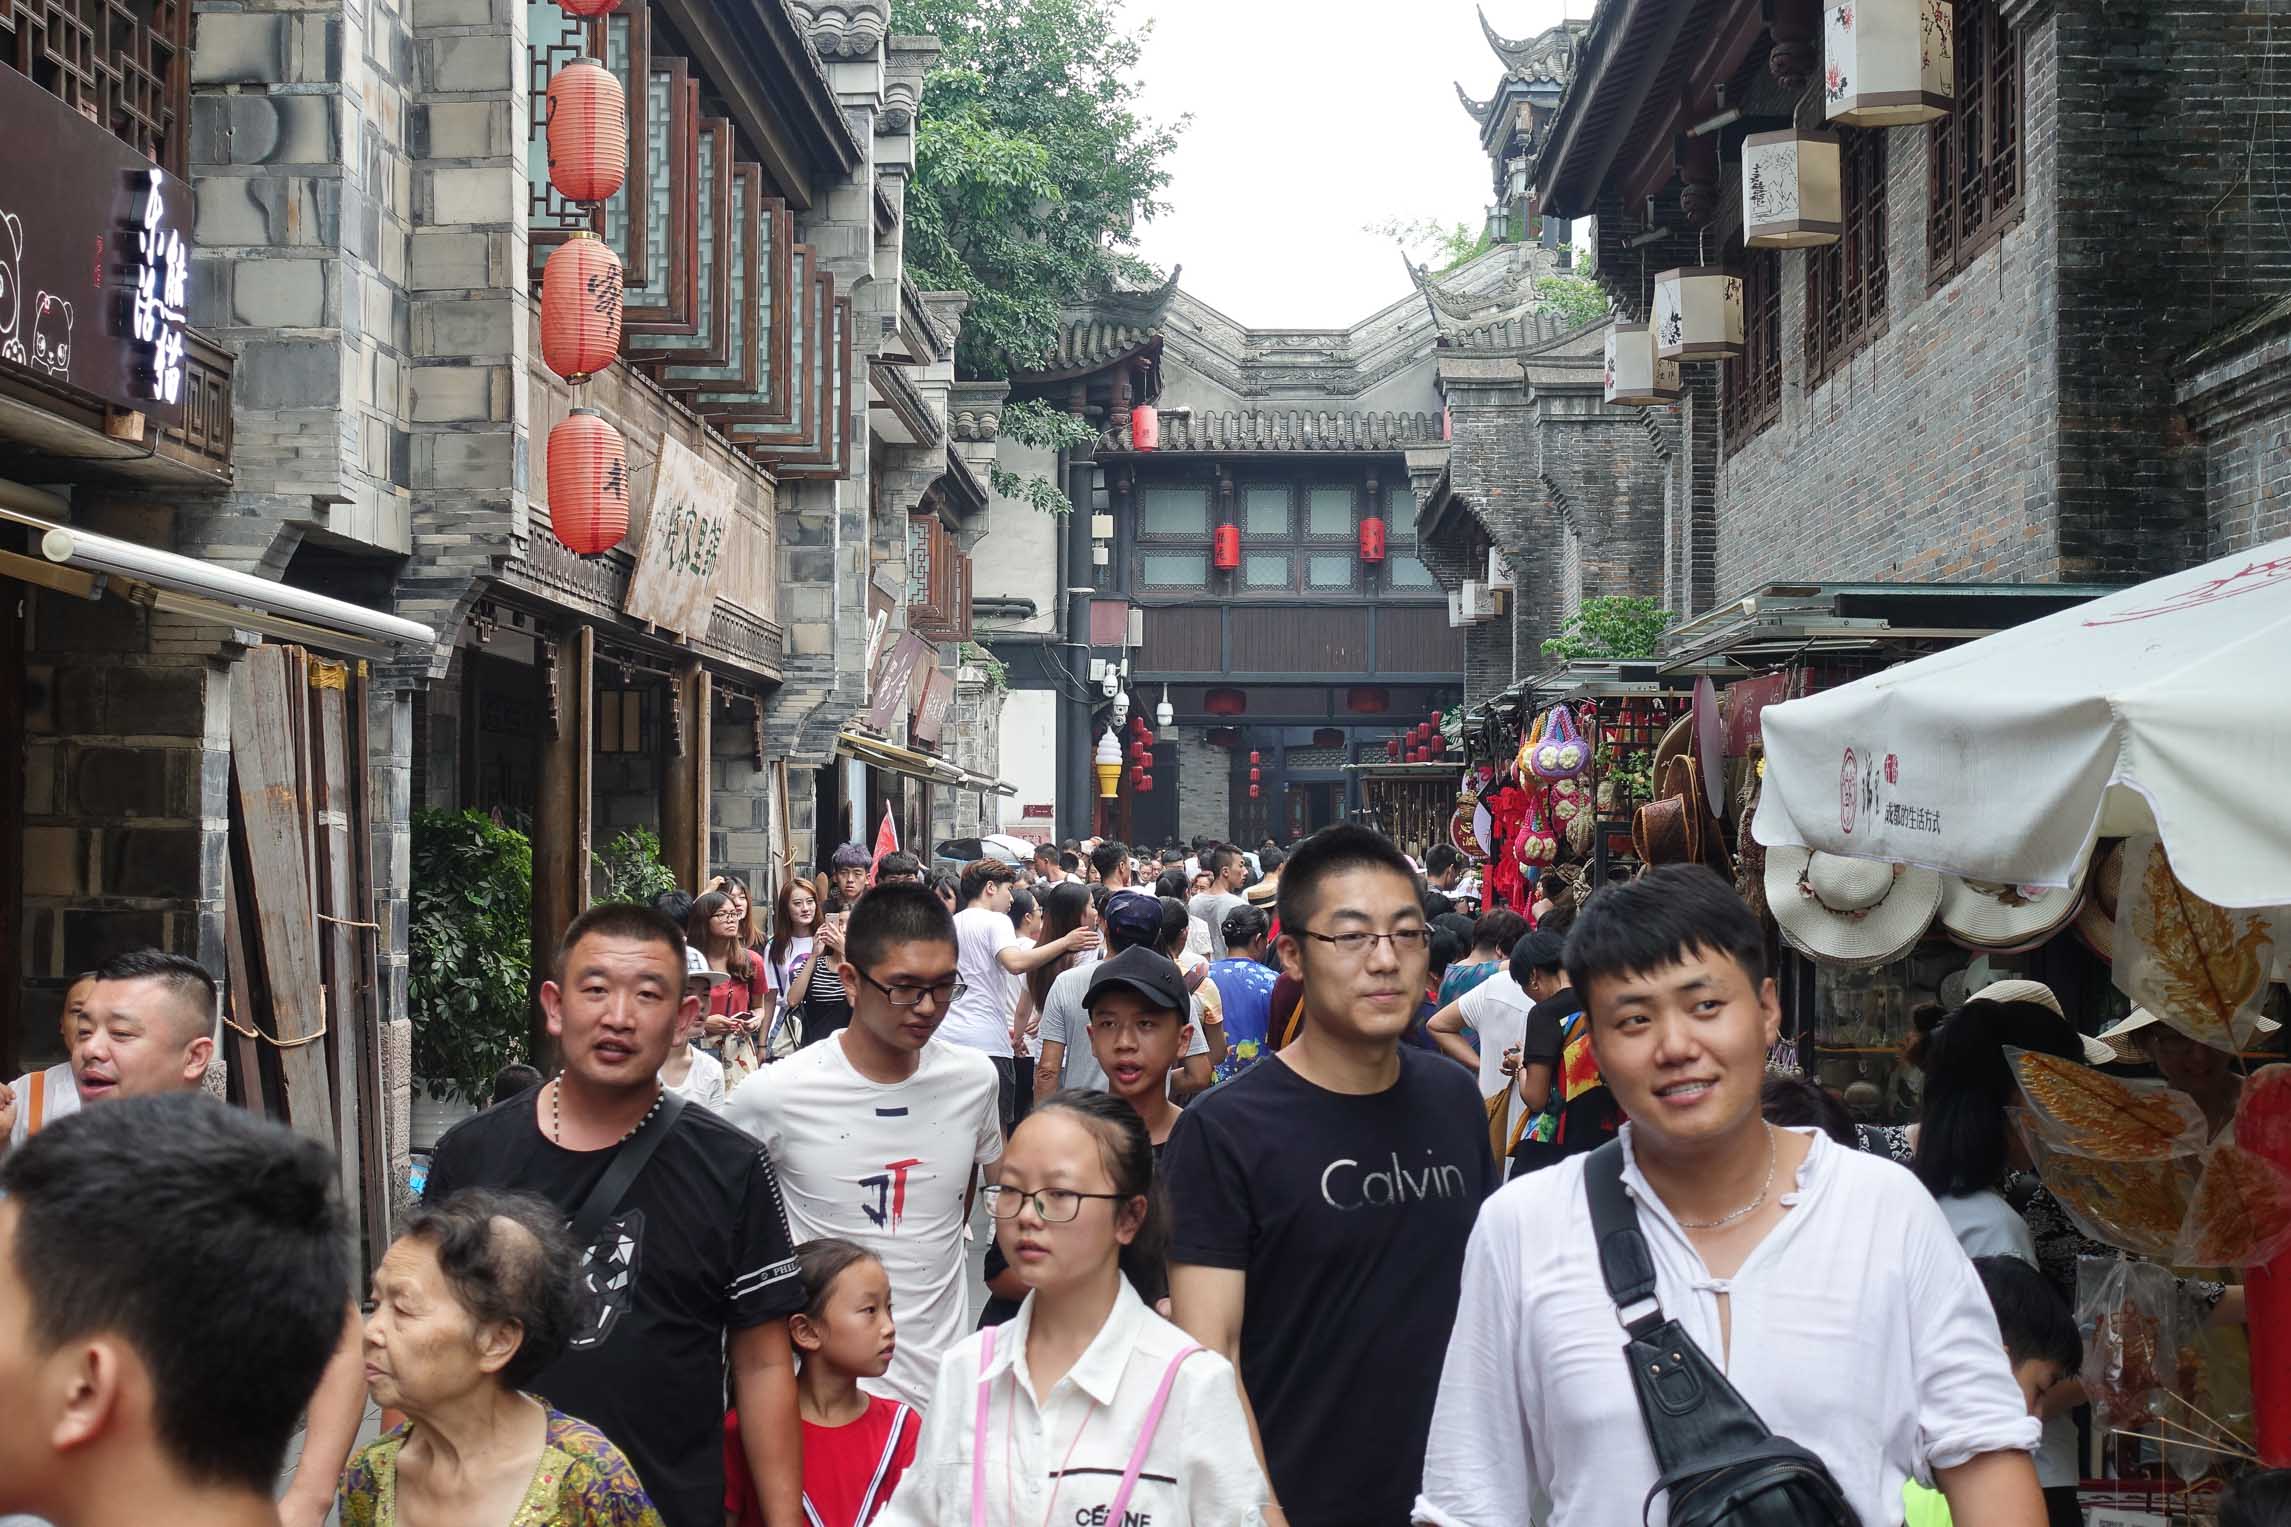 Jinli ancient street